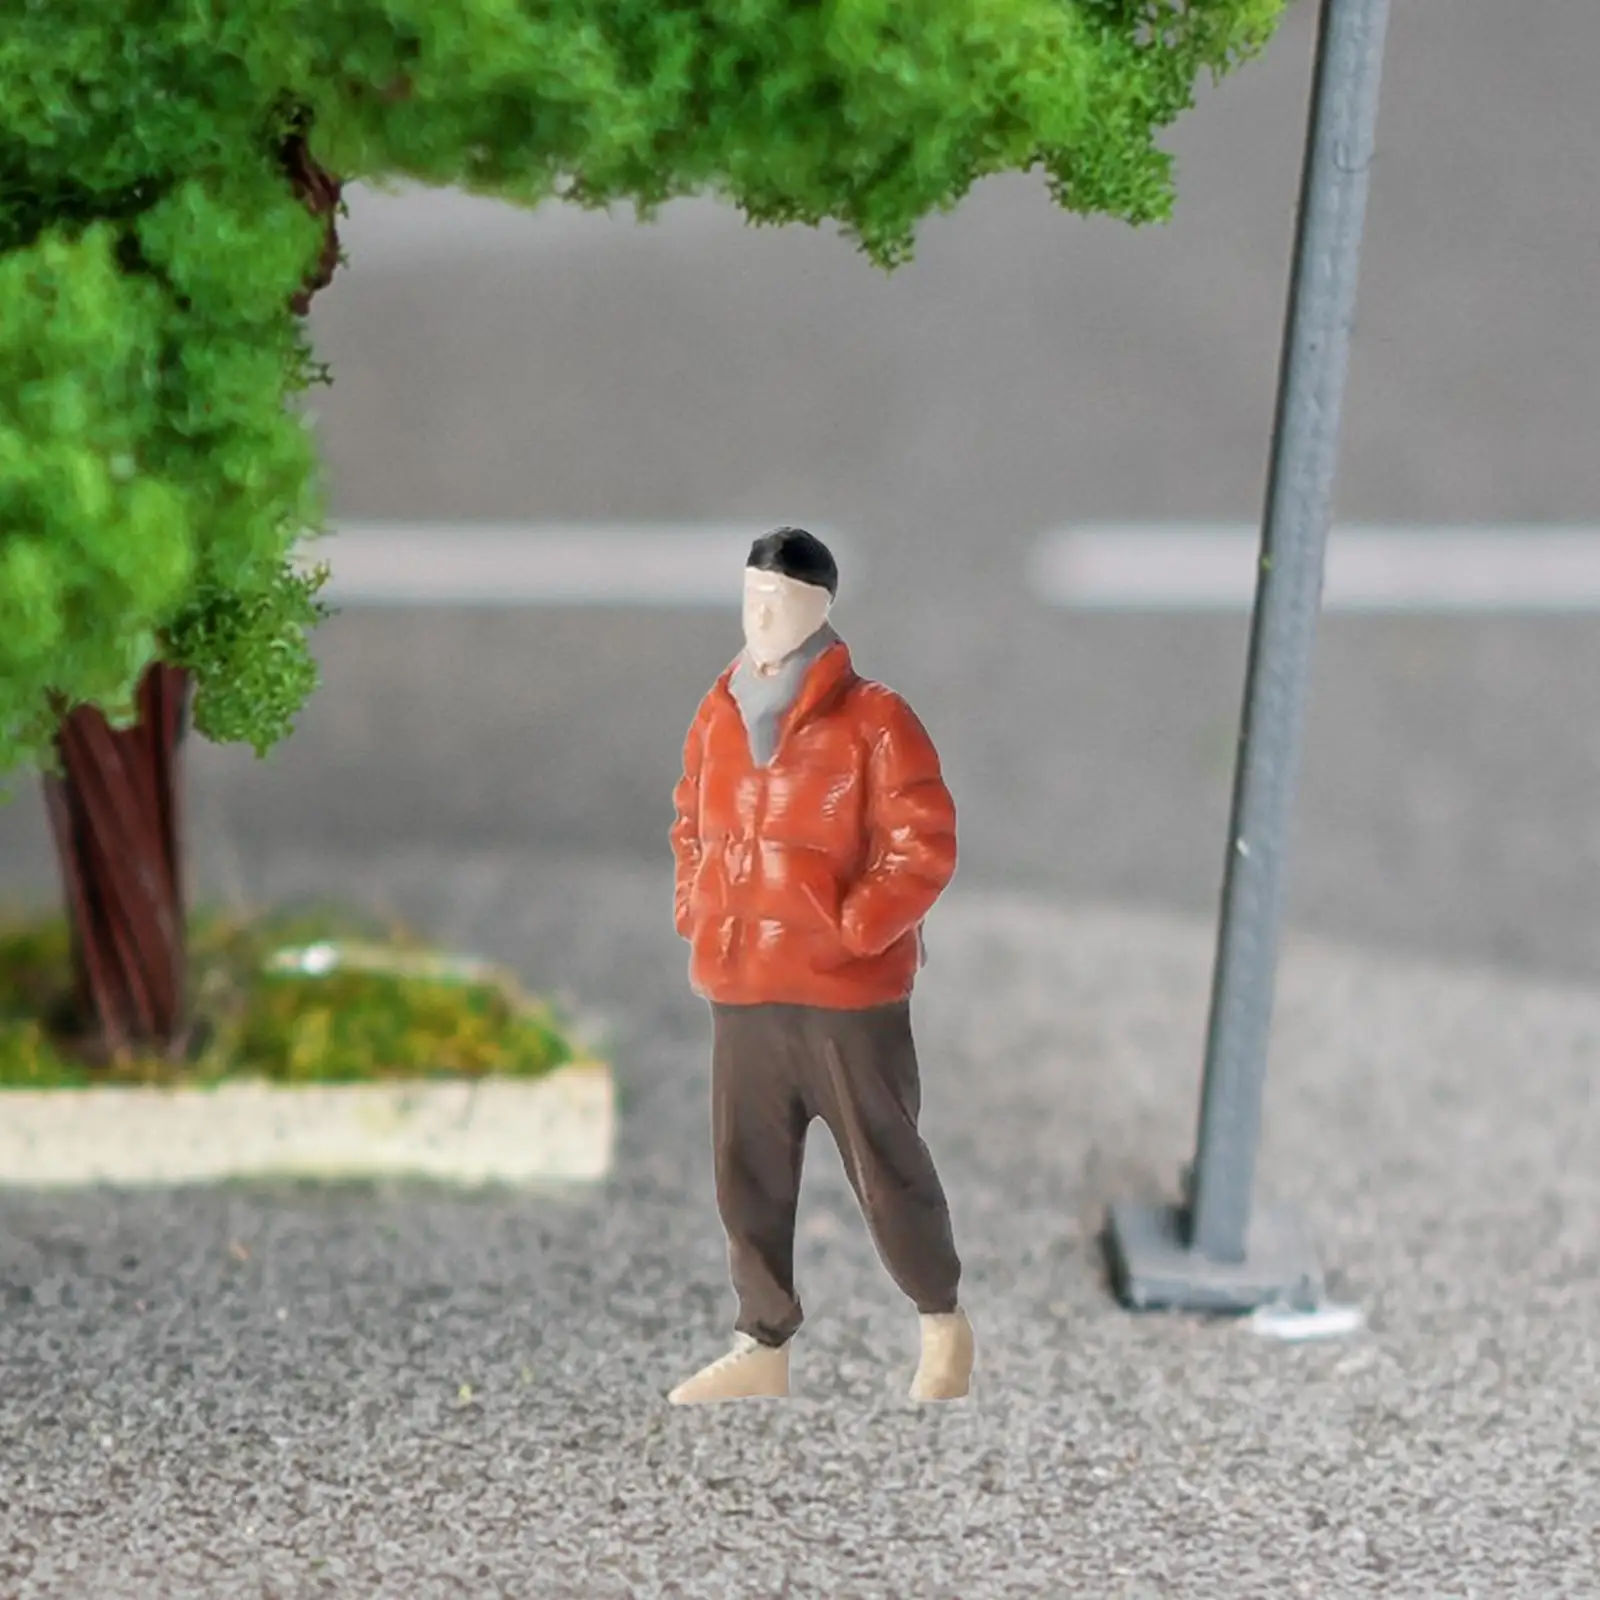 Resin 1/64 Men Figures Miniature S Gauge People Model Dioramas Micro Landscape Fairy Garden DIY Projects Train Railway Decor